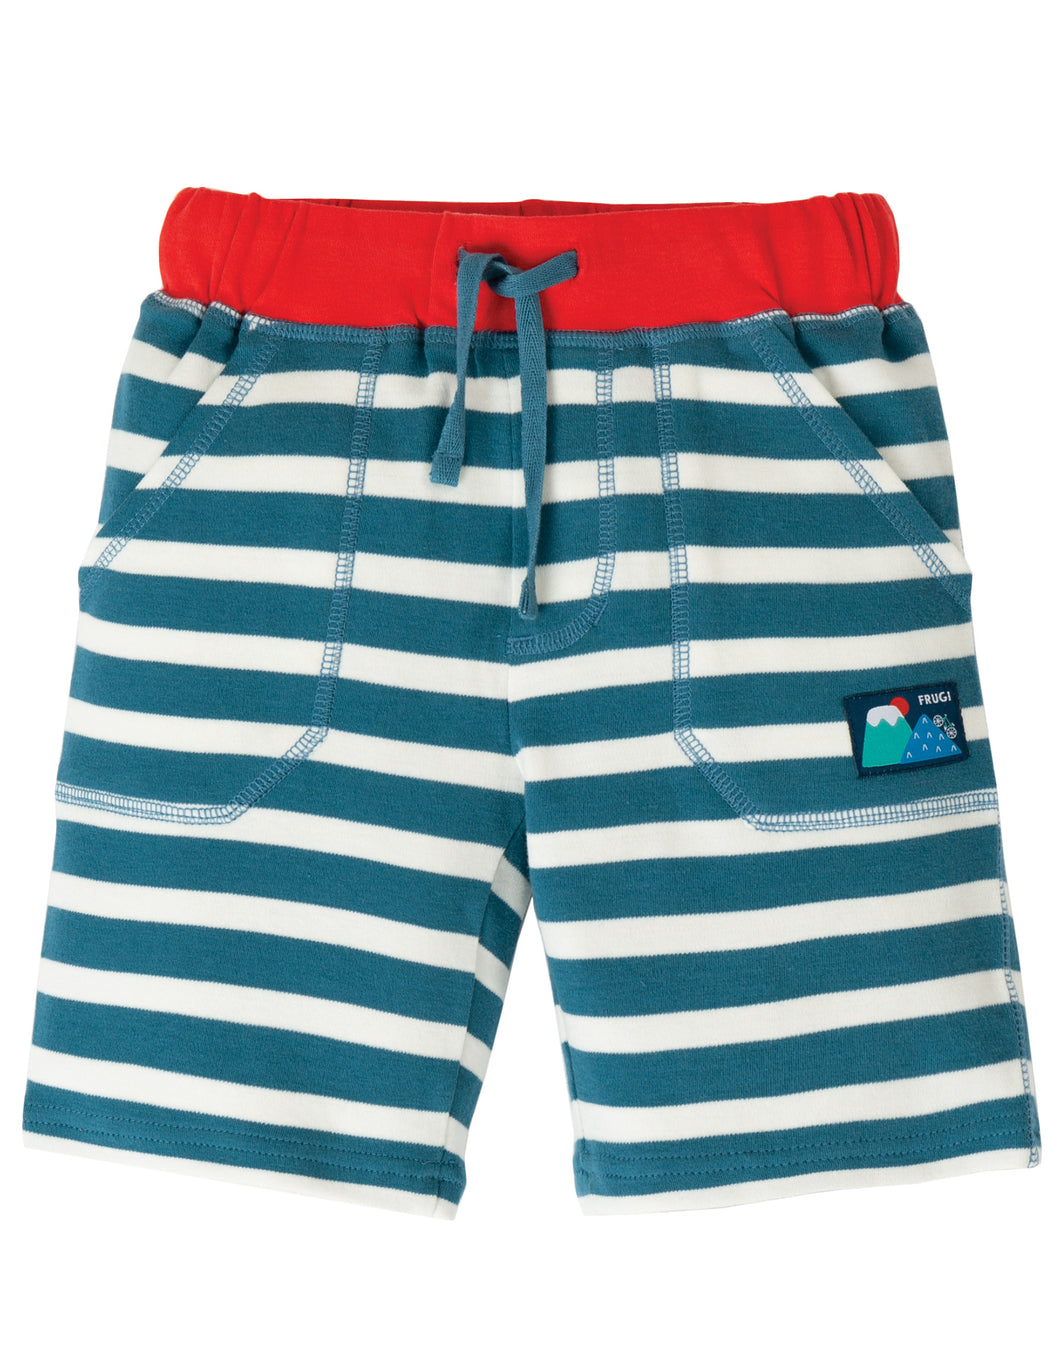 Stripy Shorts - Steely Blue Stripe